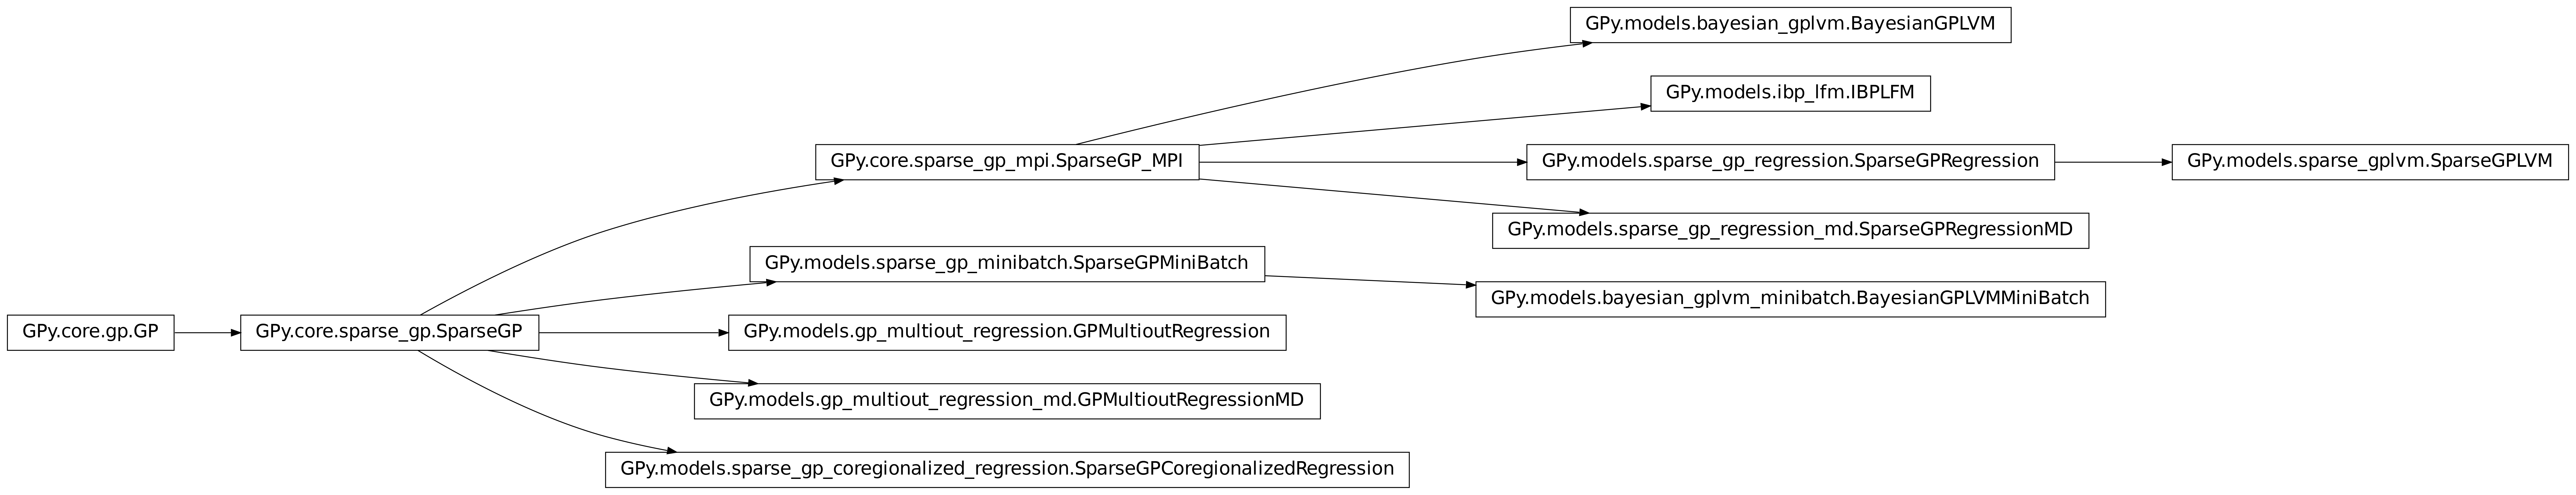 Inheritance diagram of GPy.models.bayesian_gplvm, GPy.models.bayesian_gplvm_minibatch, GPy.models.gp_multiout_regression, GPy.models.gp_multiout_regression_md, GPy.models.ibp_lfm.IBPLFM, GPy.models.sparse_gp_coregionalized_regression, GPy.models.sparse_gp_minibatch, GPy.models.sparse_gp_regression, GPy.models.sparse_gp_regression_md, GPy.models.sparse_gplvm